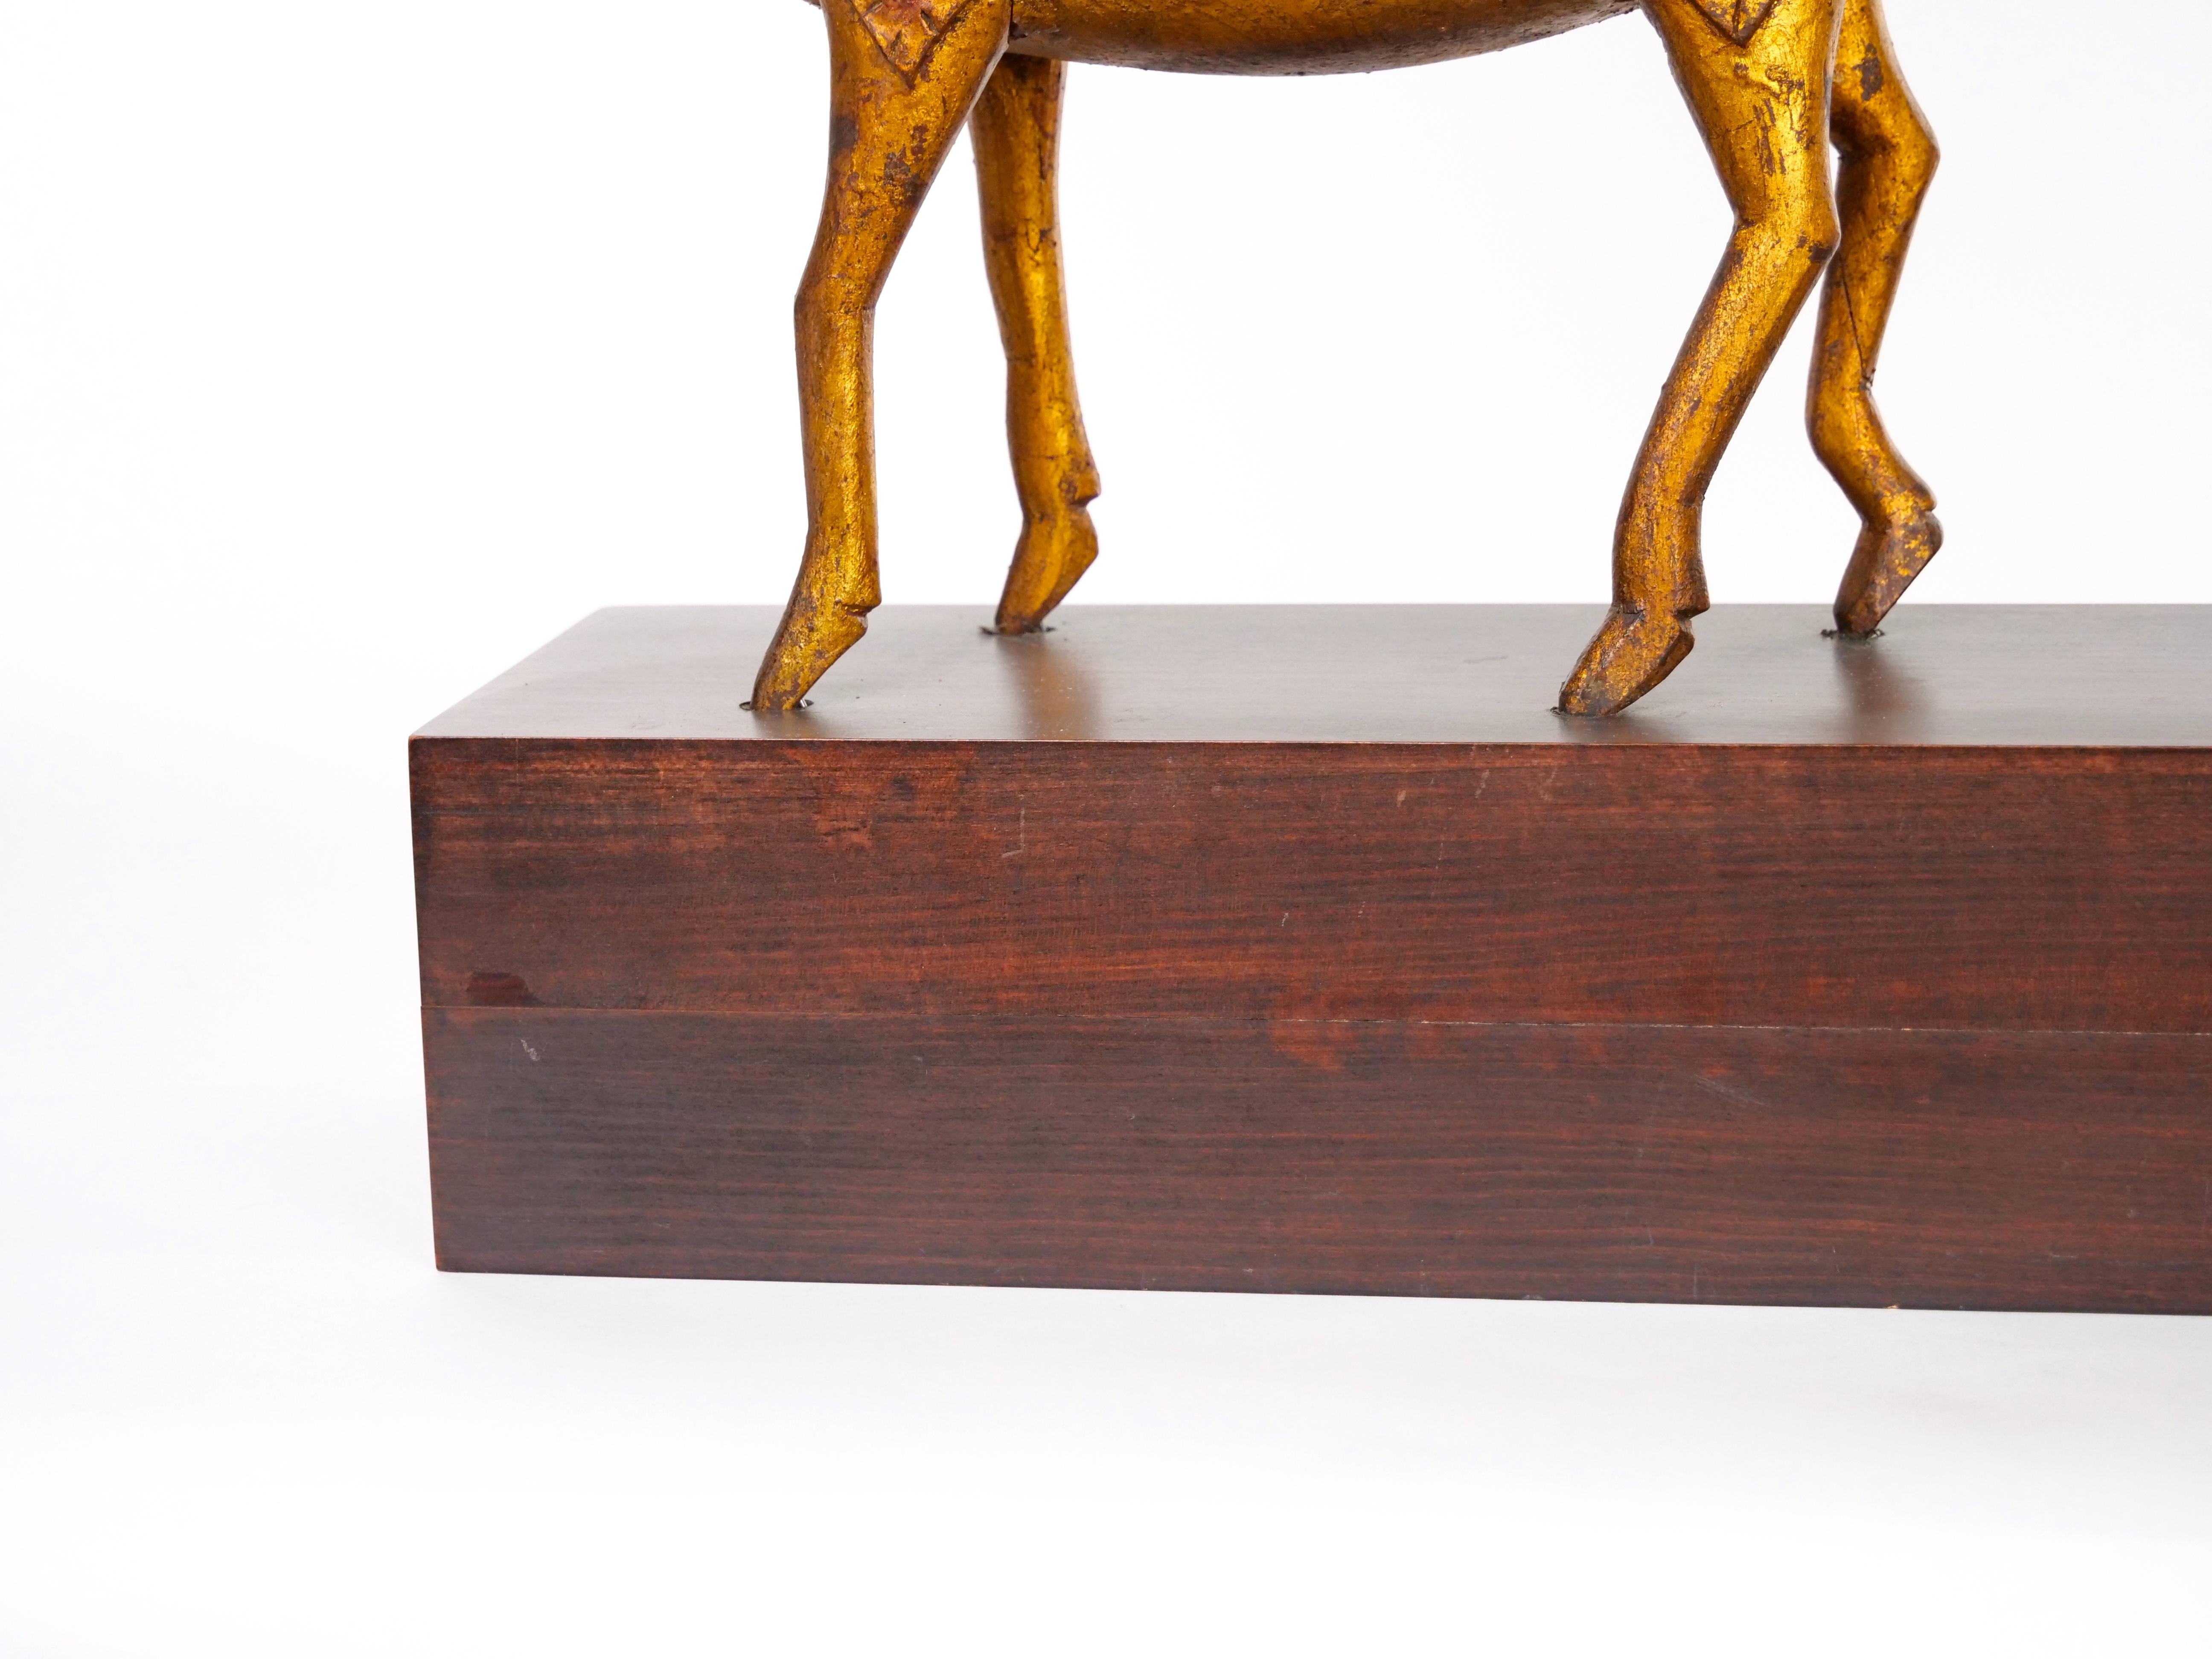  Hand Carved Gilt Gold Animal Sculpture / Wood Base Decorative Piece For Sale 5